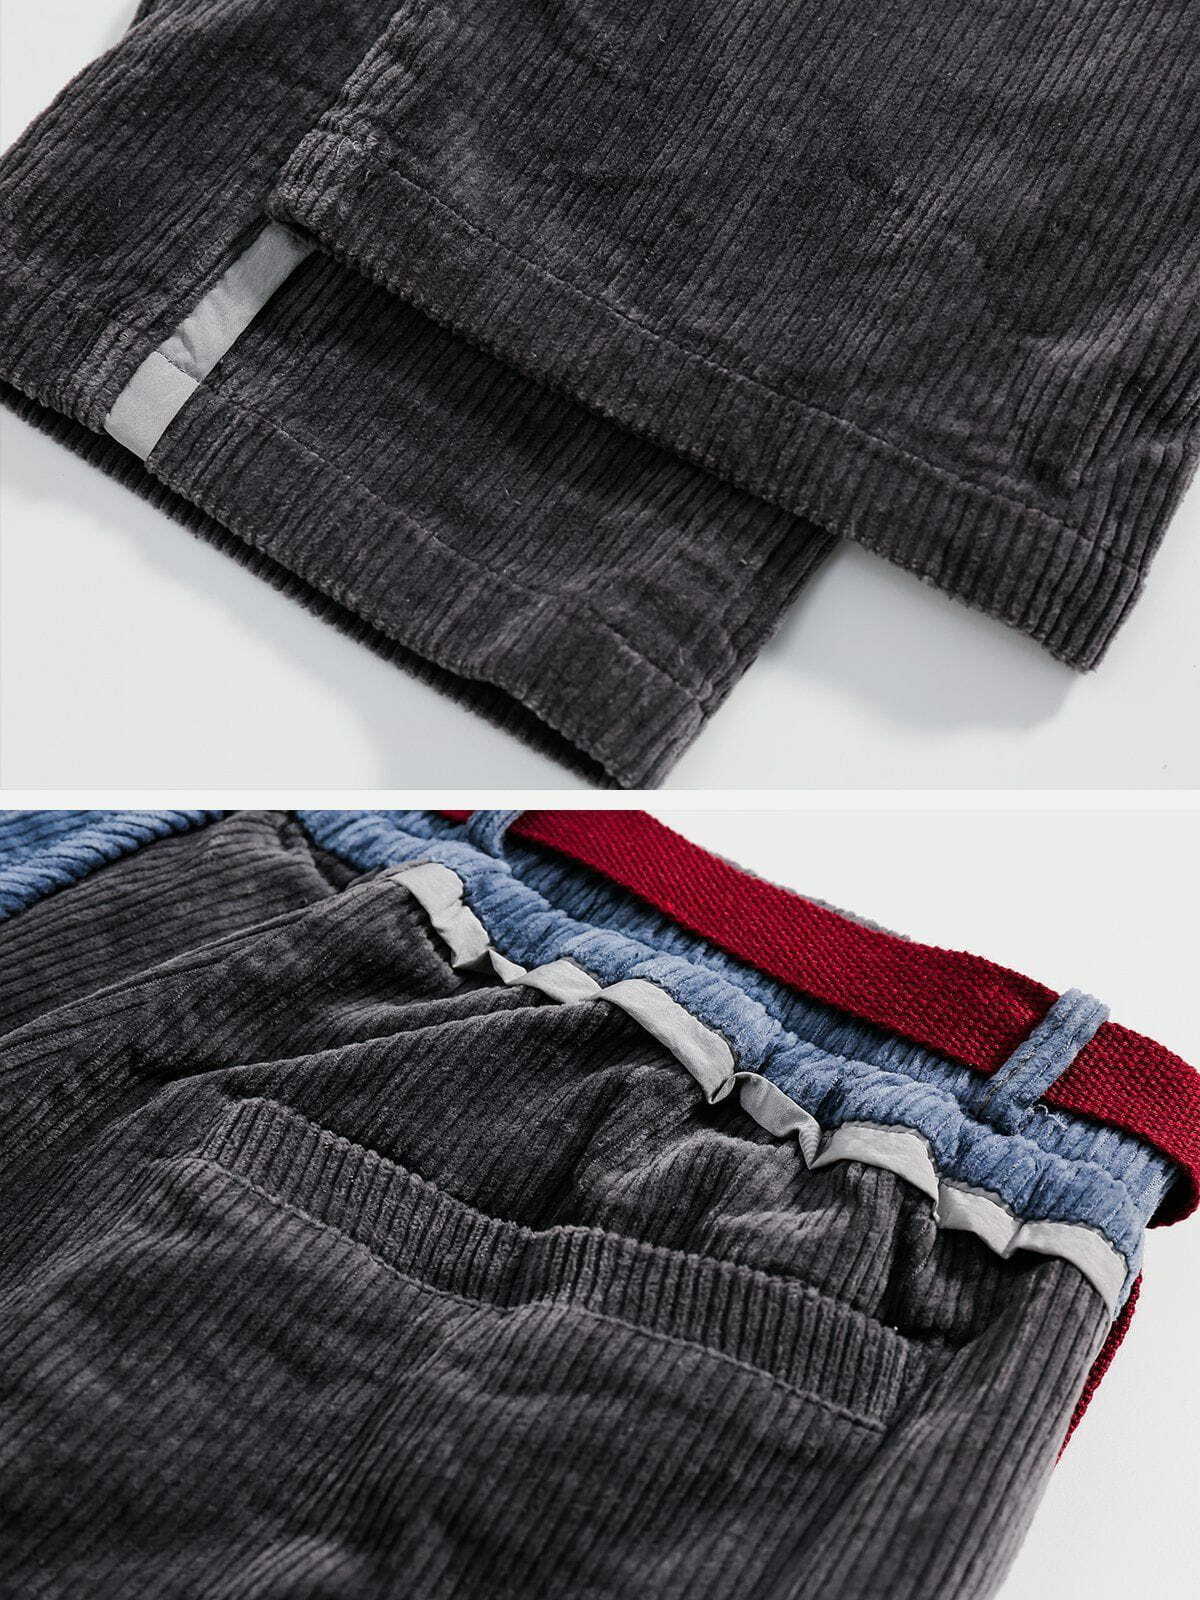 wideleg patchwork corduroy pants retro & edgy streetwear 7417